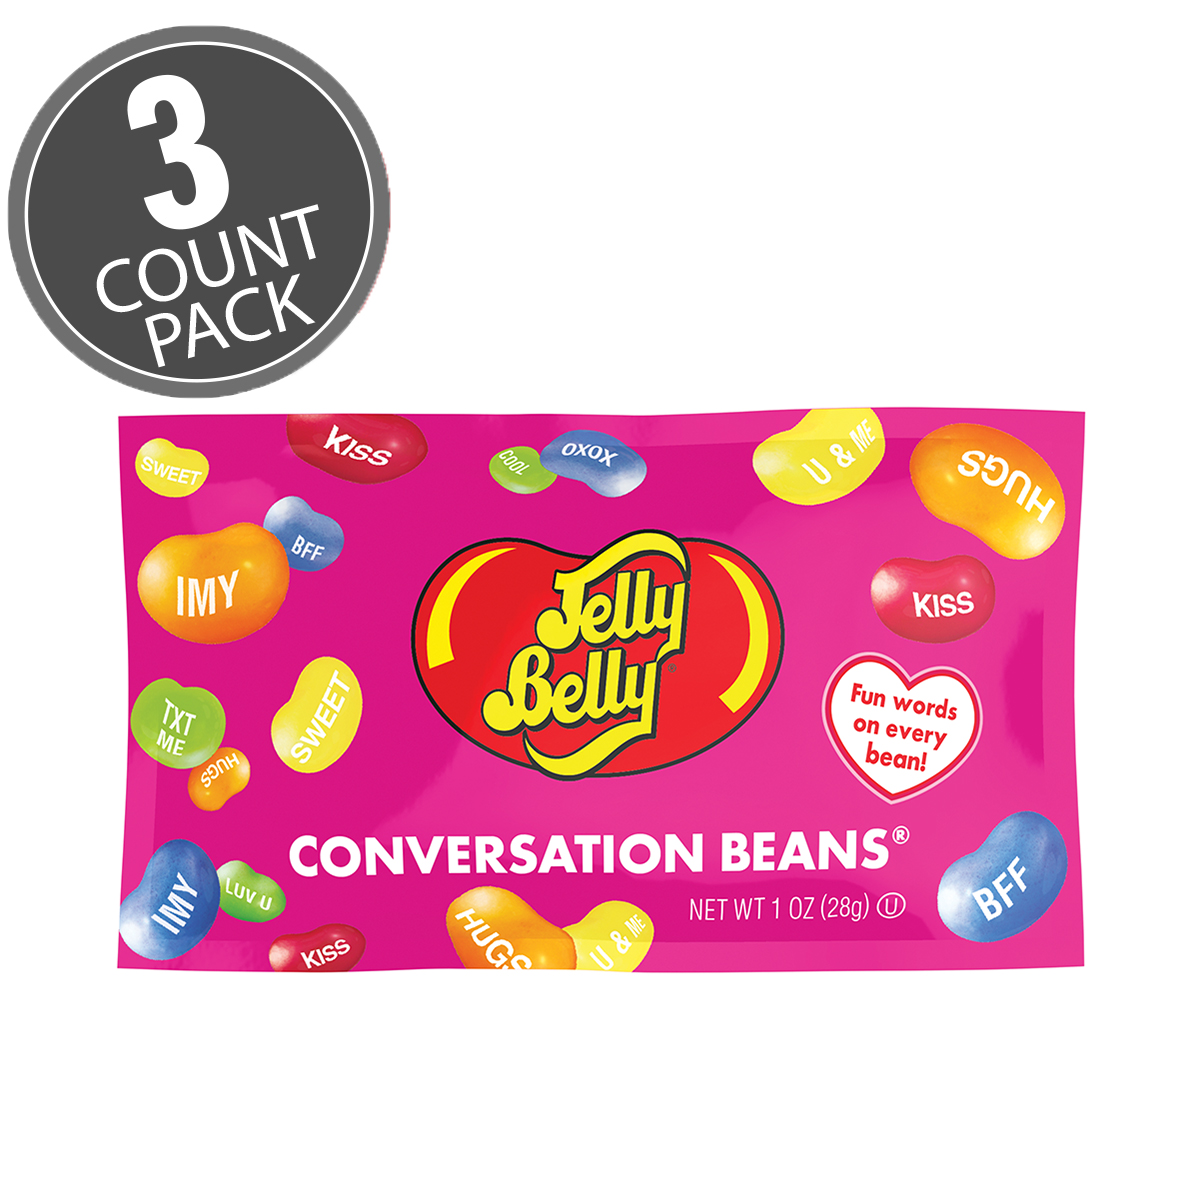 Distributeur de bonbons Jelly Belly - Vintage by fabichka